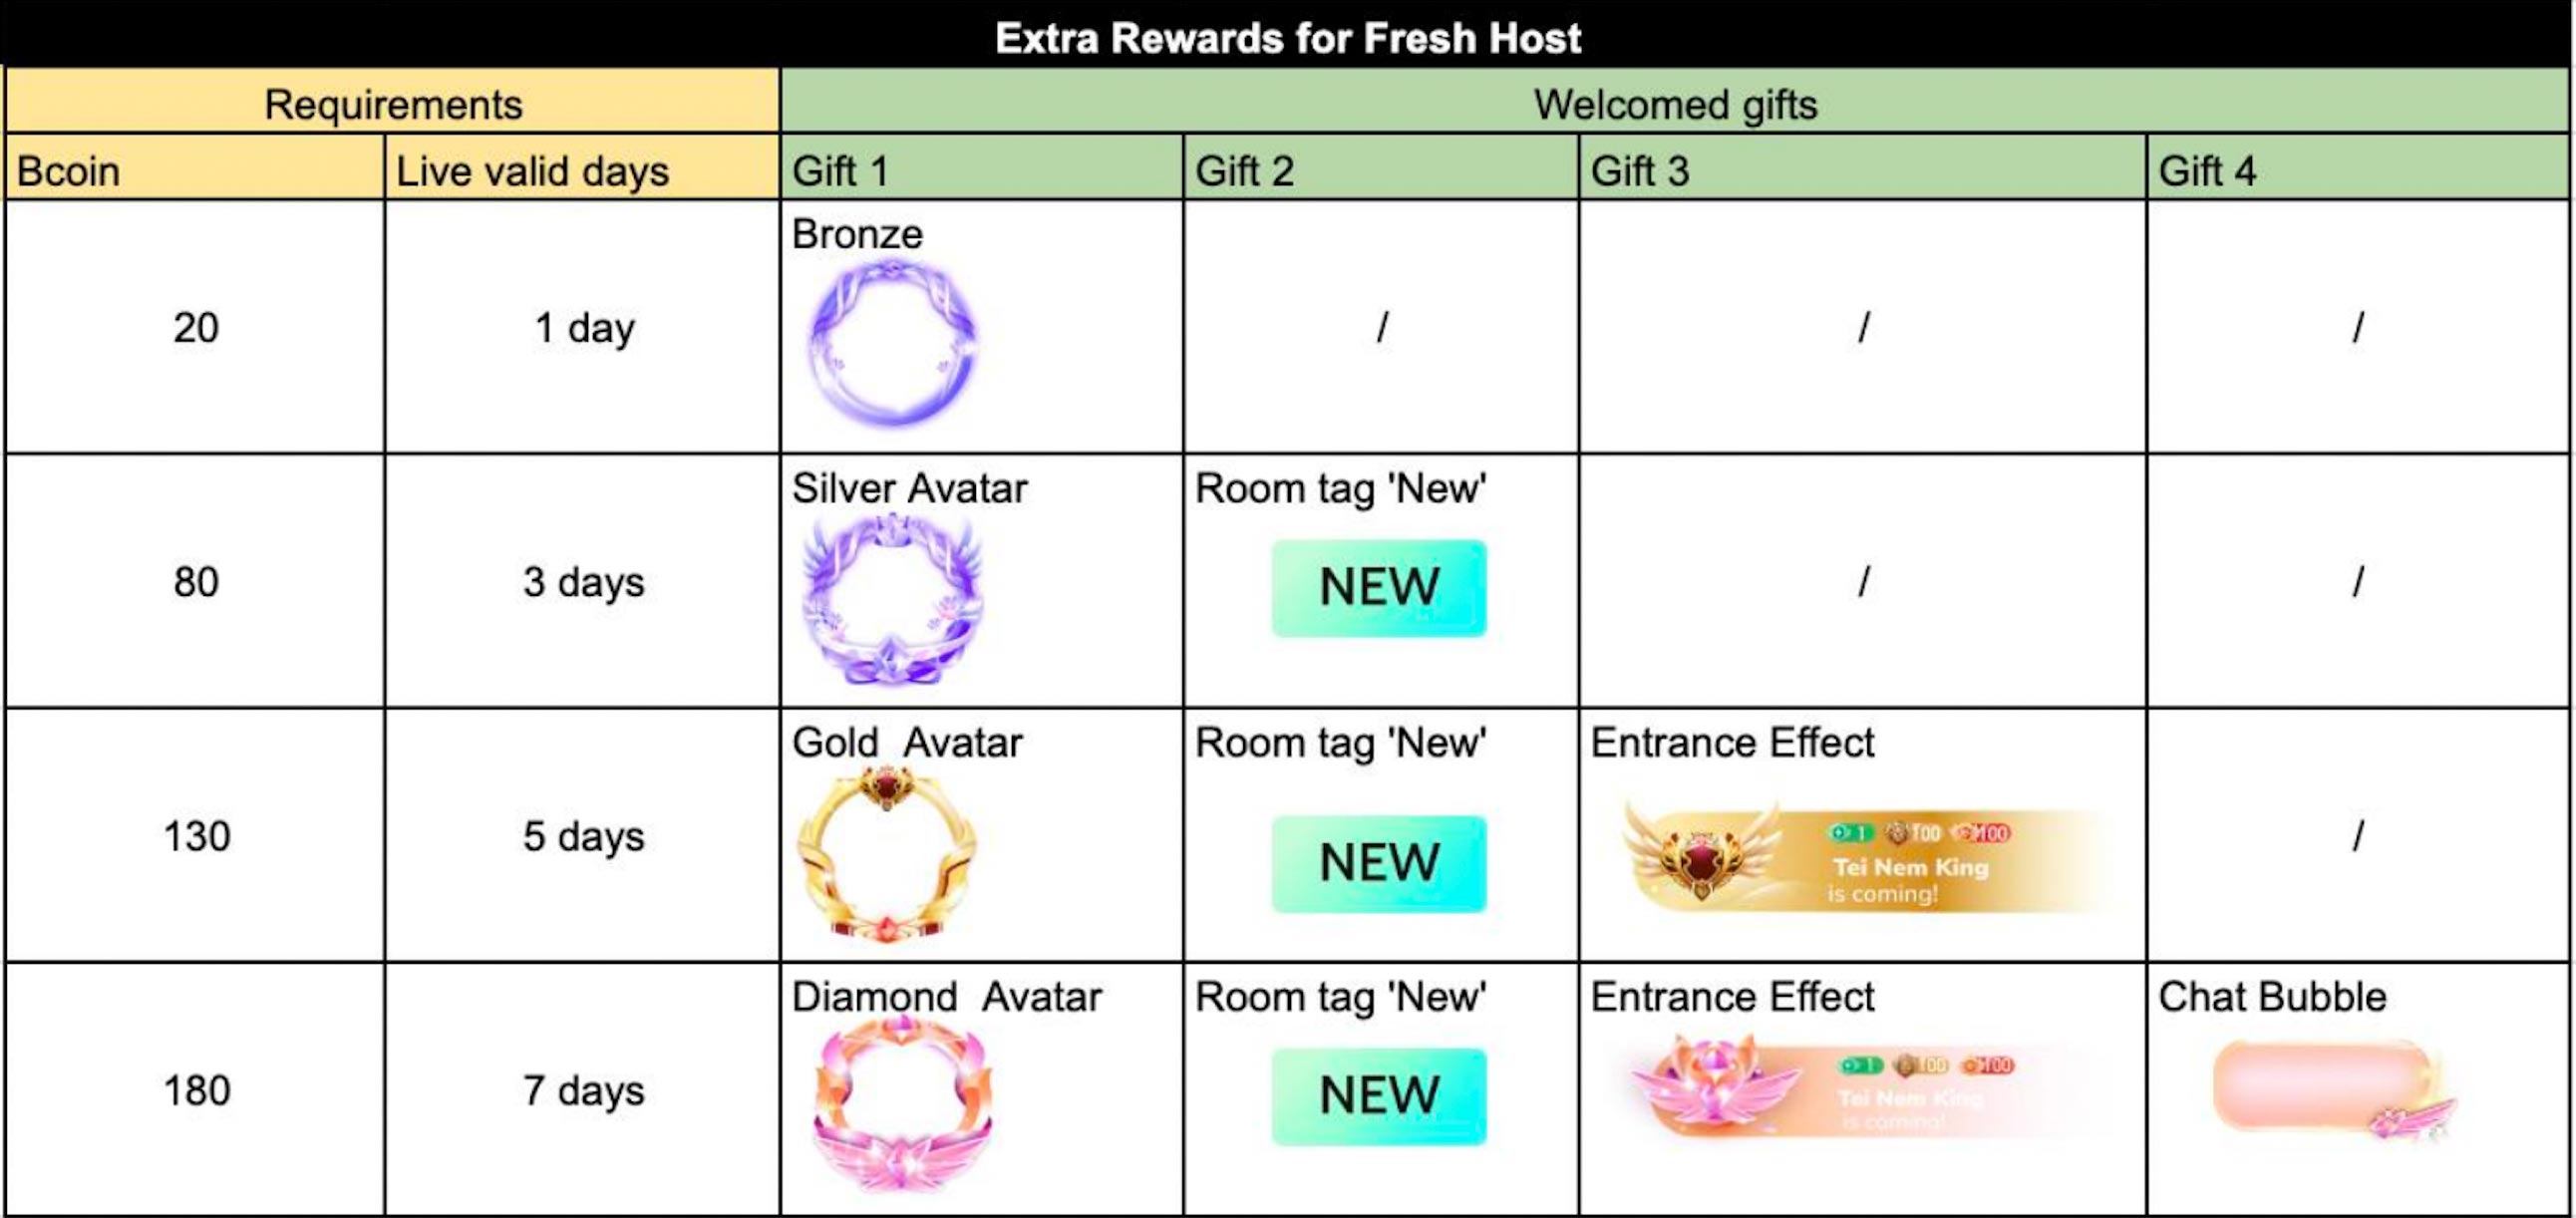 Extra Rewards for Fresh Host